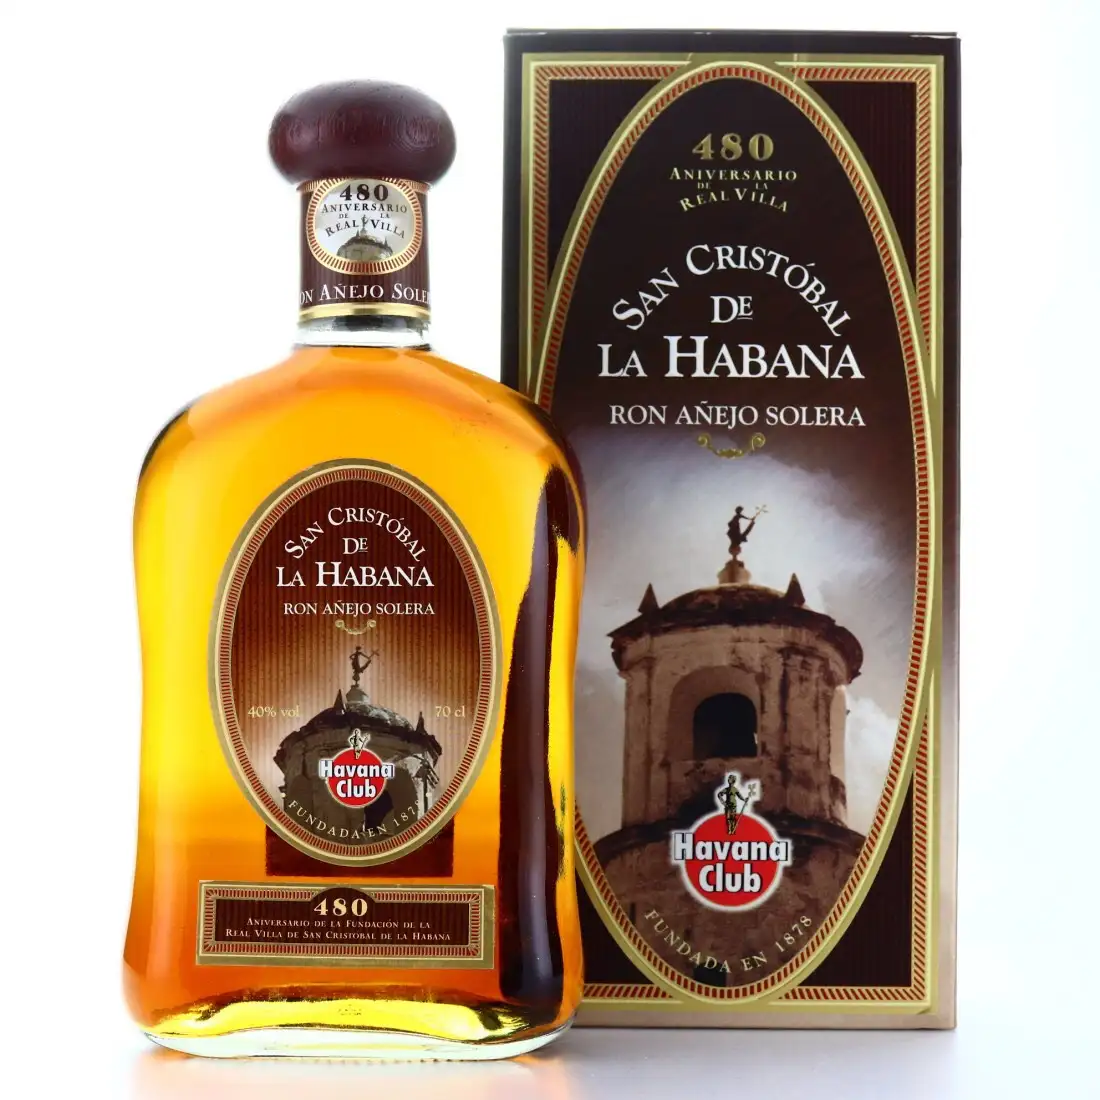 Image of the front of the bottle of the rum San Cristóbal de la Habana - 480 Aniversario